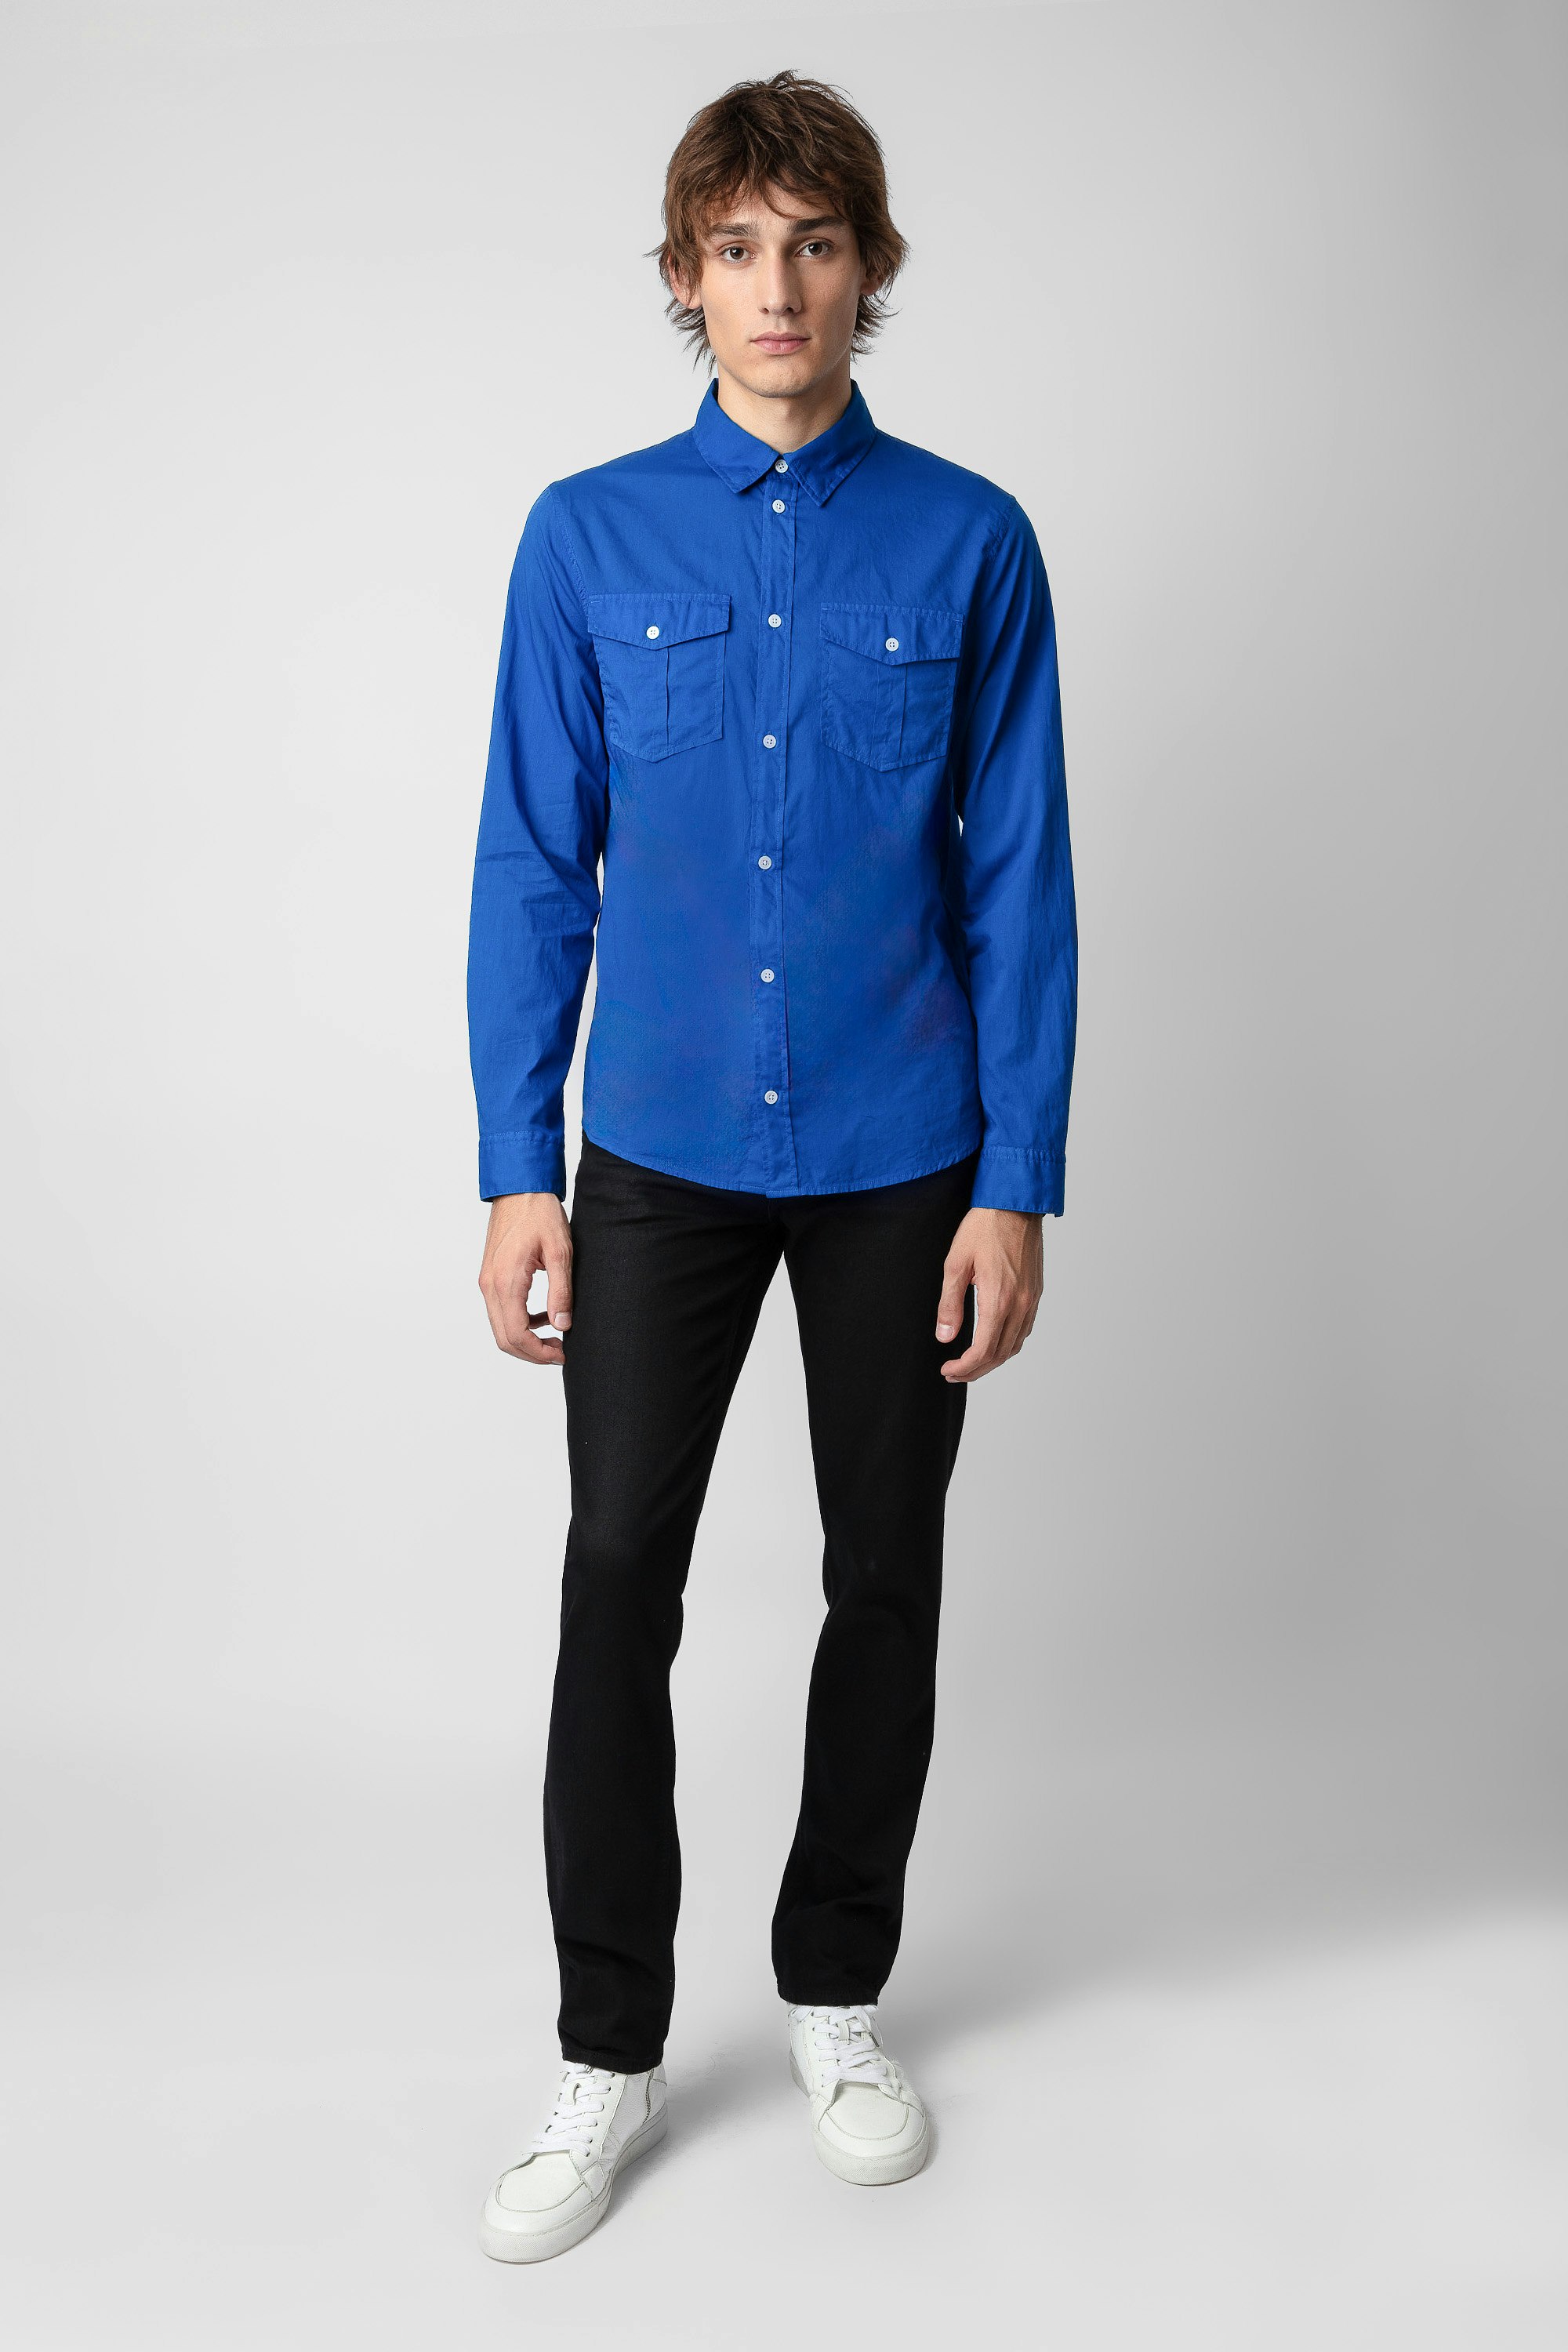 Thibault Shirt  - Men’s blue cotton shirt.